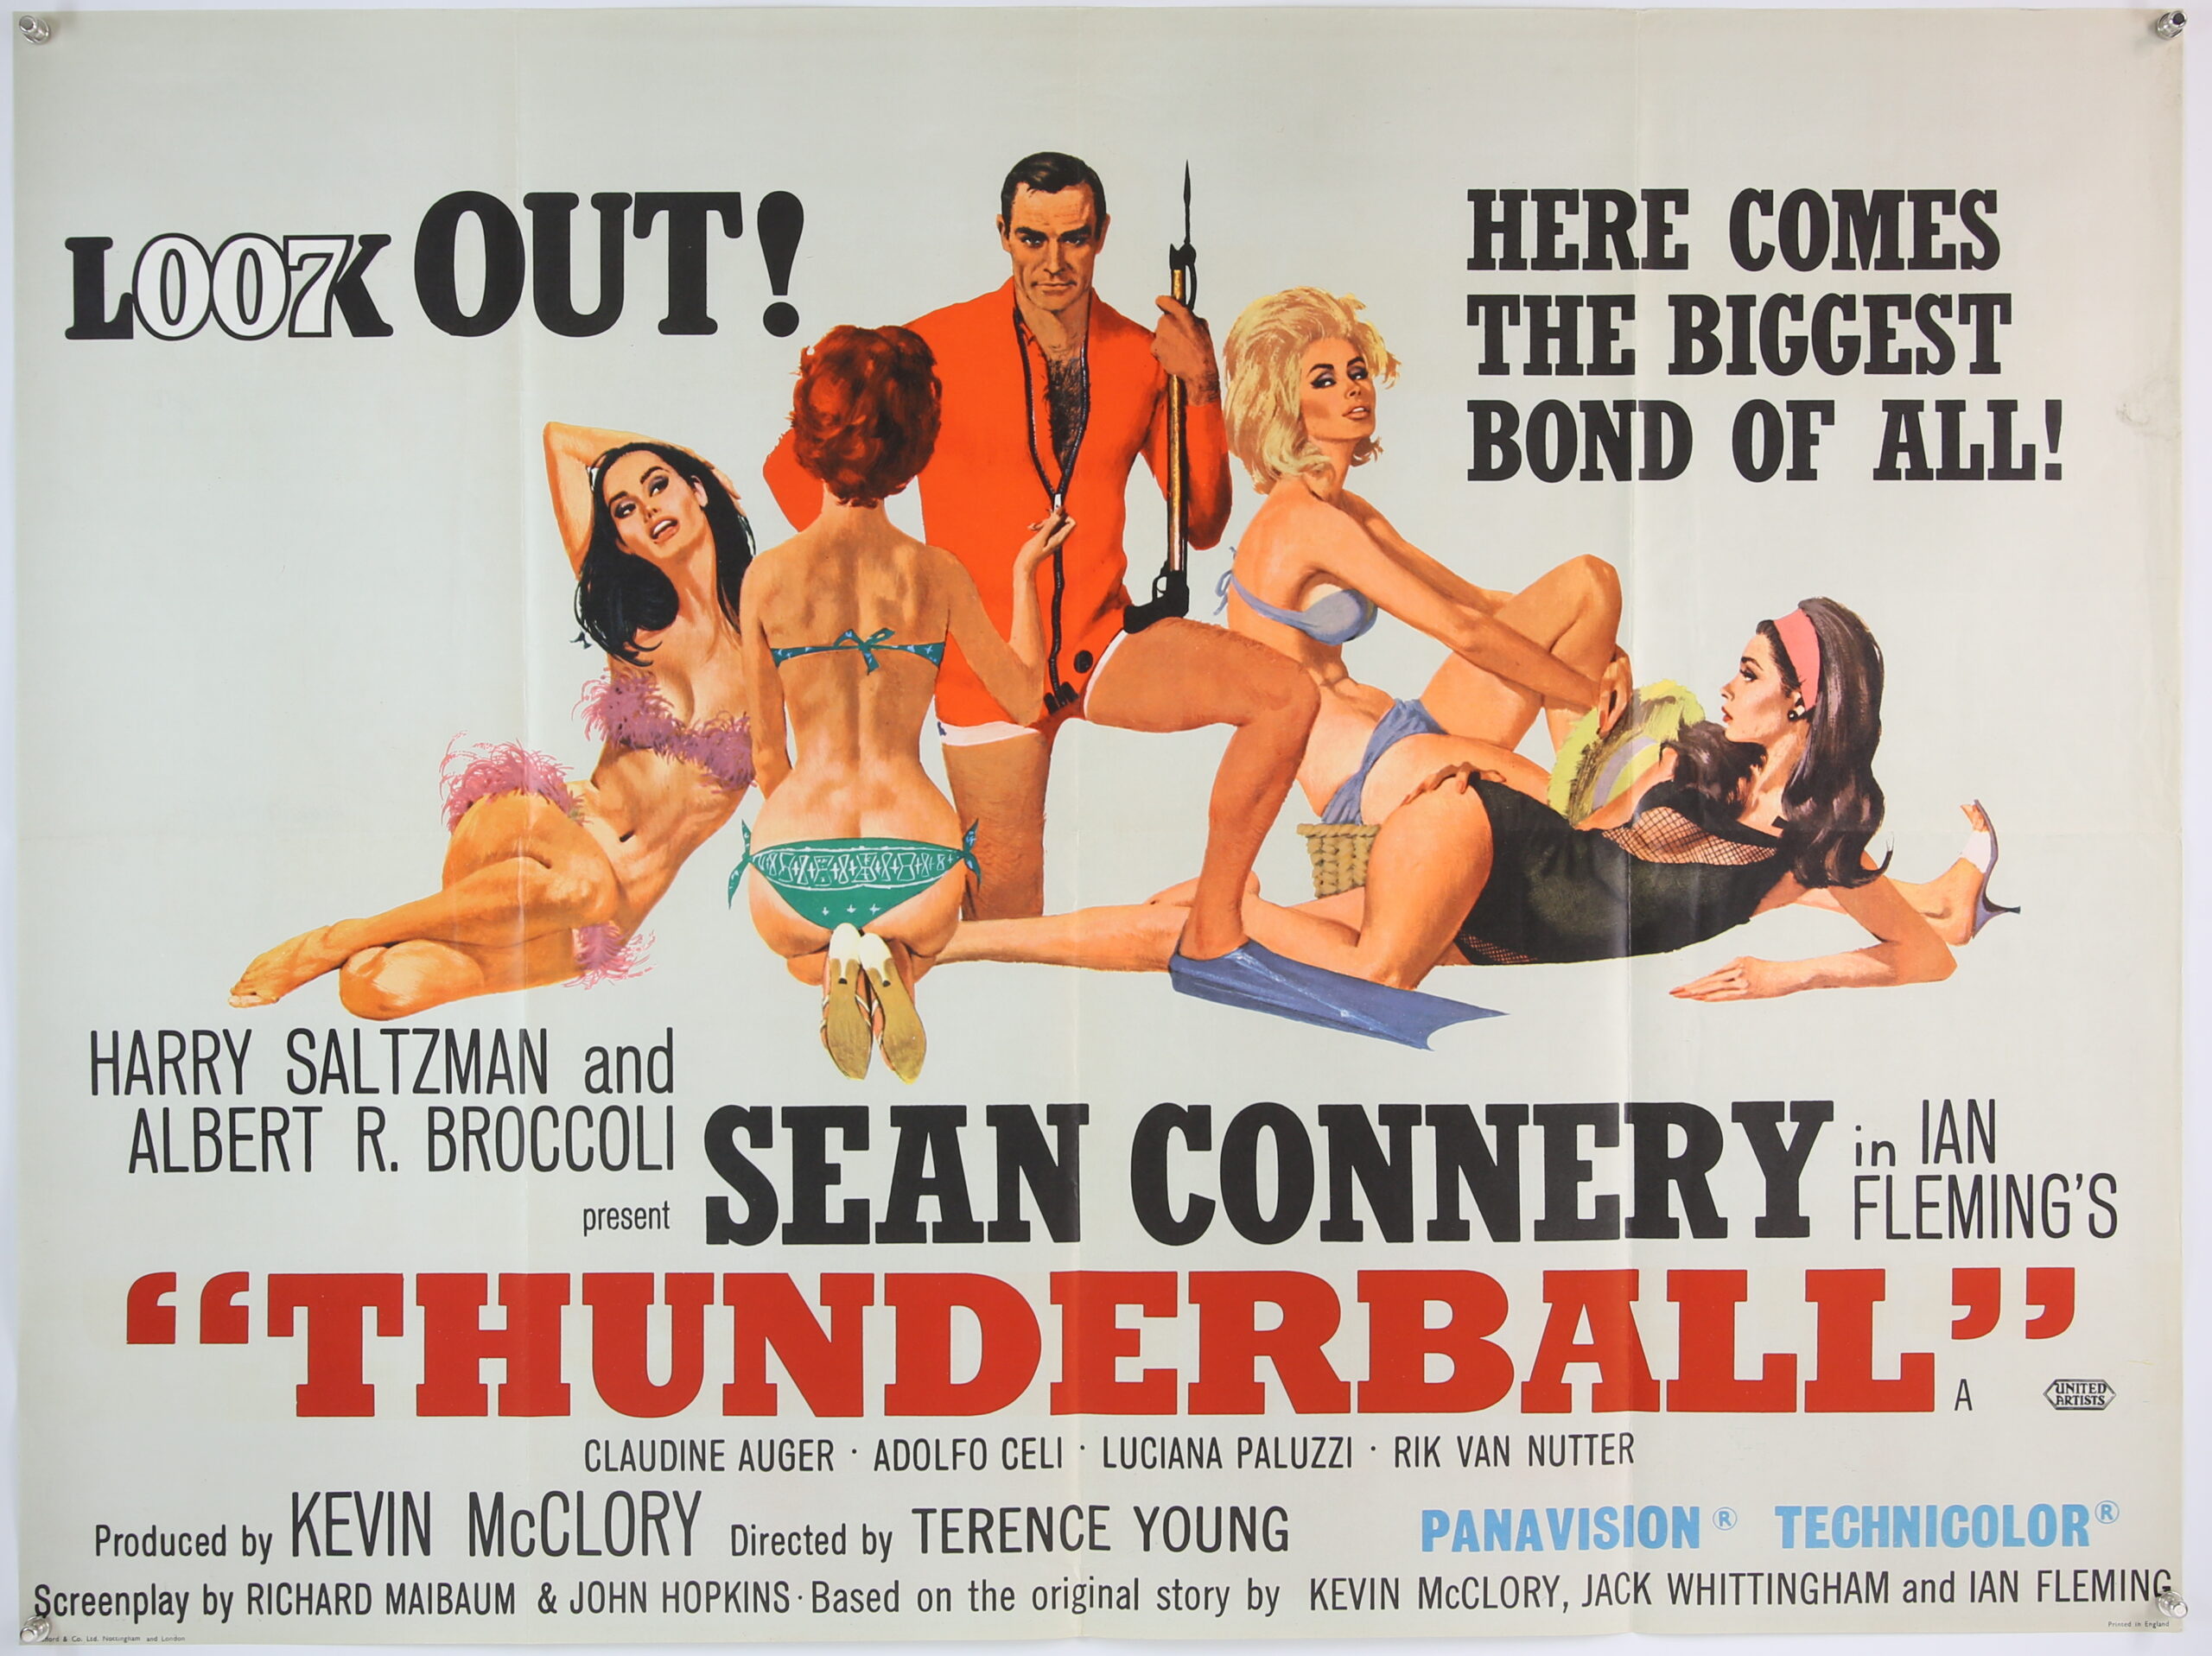 An original James Bond film poster for Thunderball